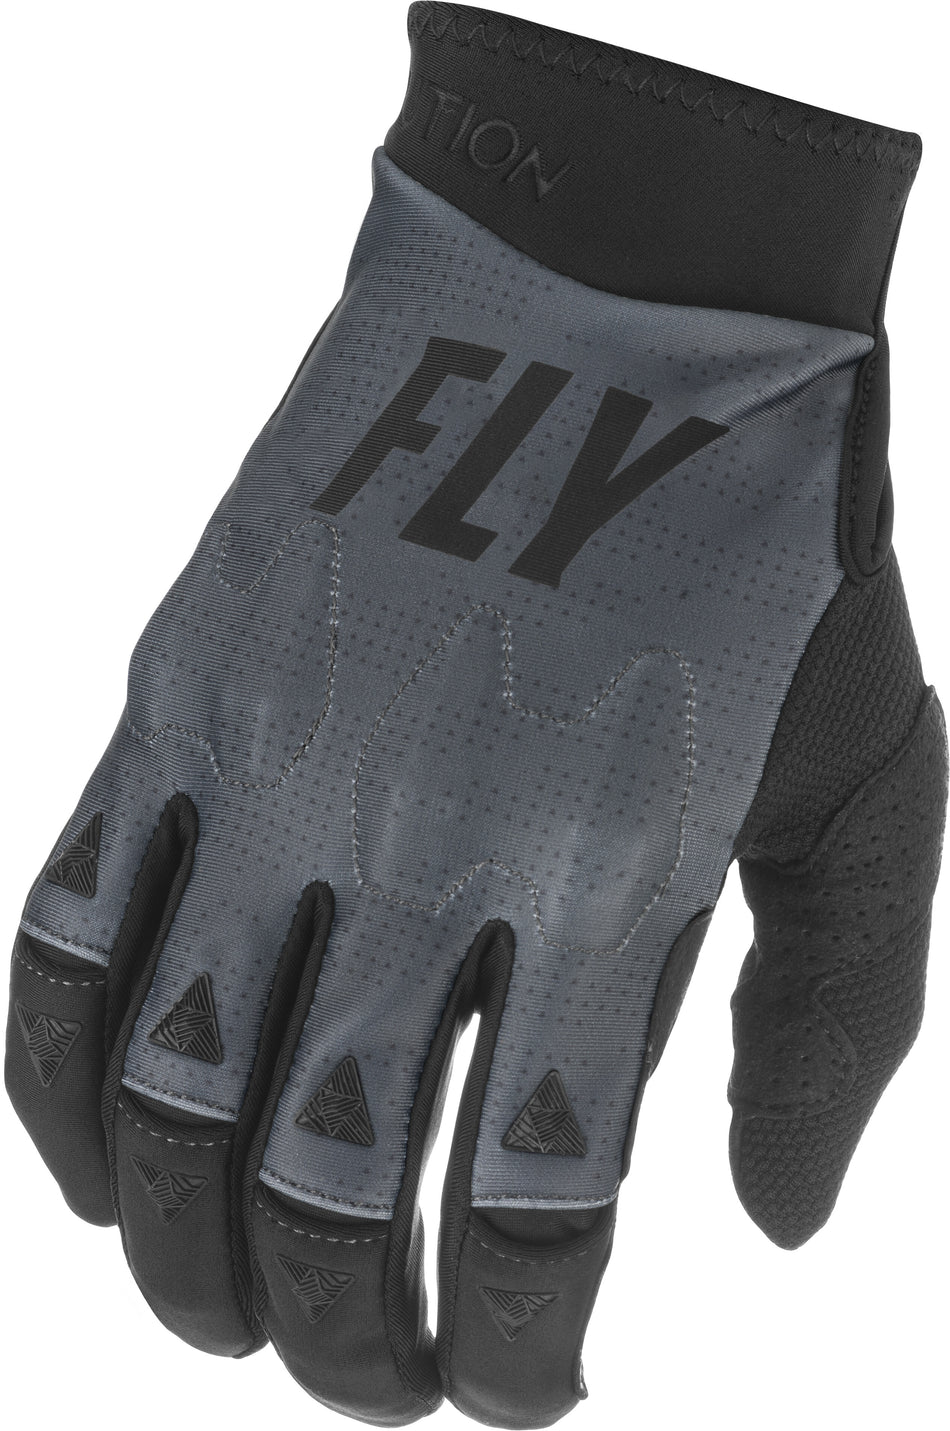 FLY RACING Evolution Dst Gloves Grey/Black/Stone Sz 10 374-11610